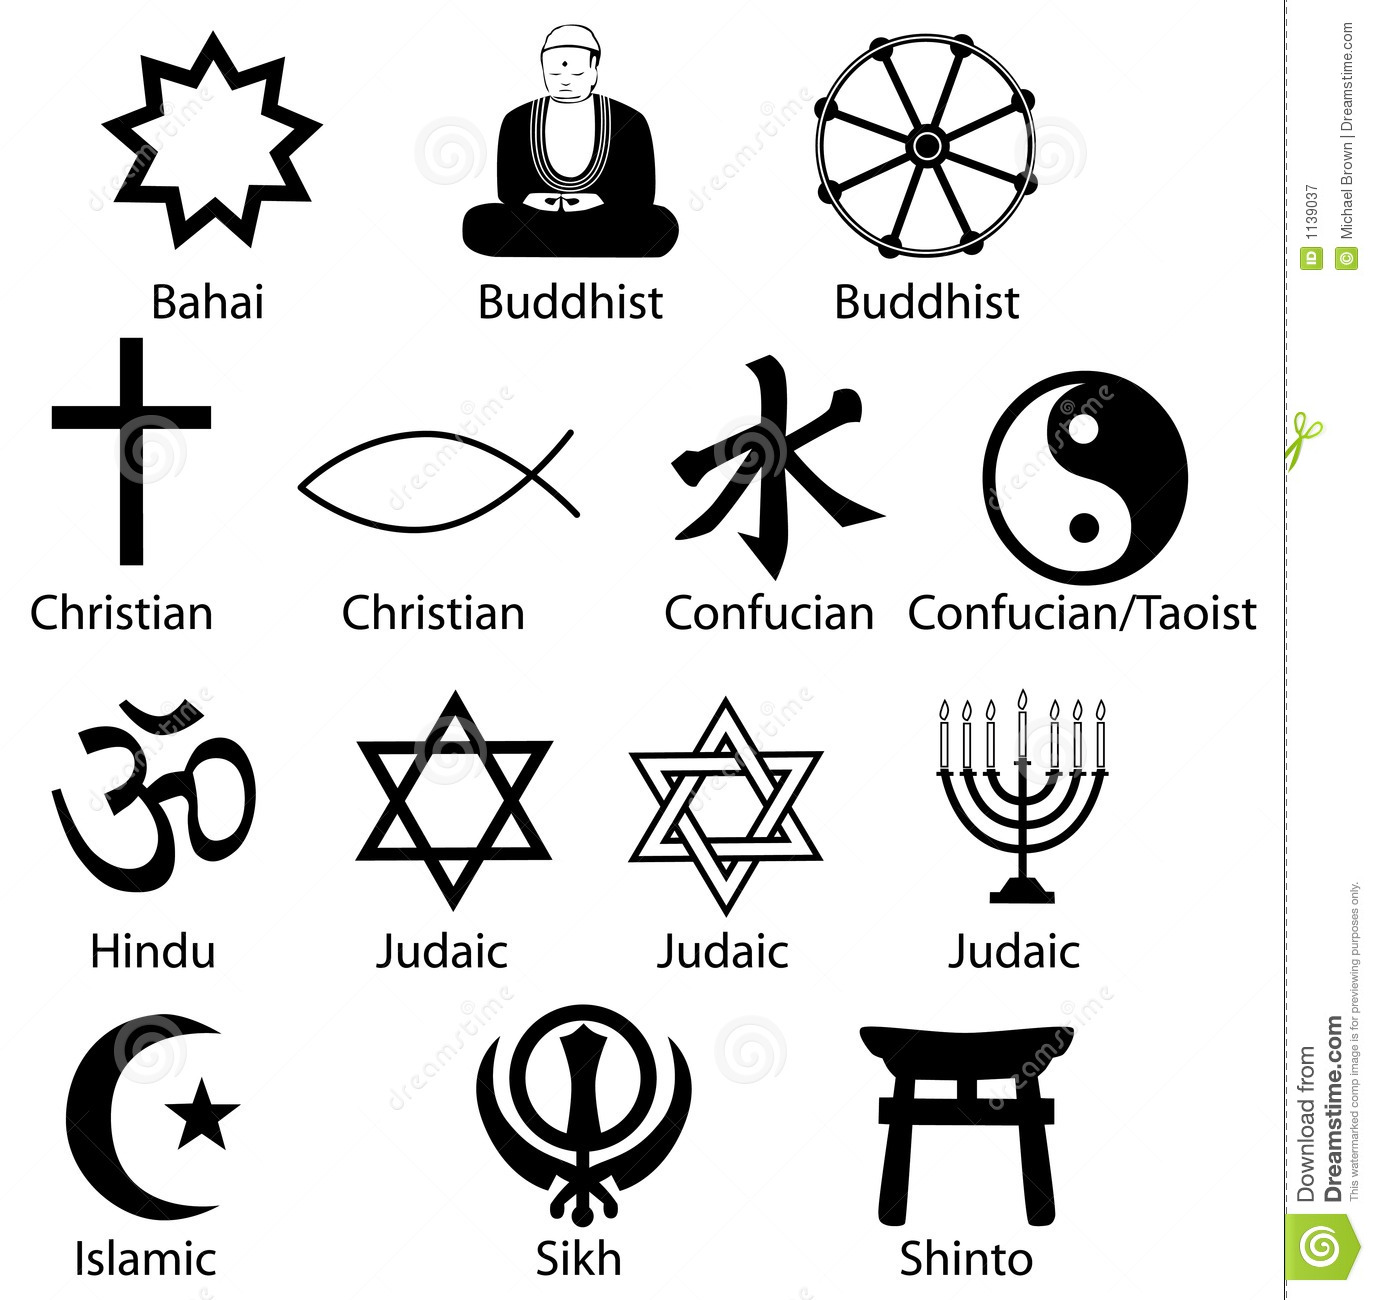 Royalty Free Stock Photography Religion Symbols Religious Image1139037